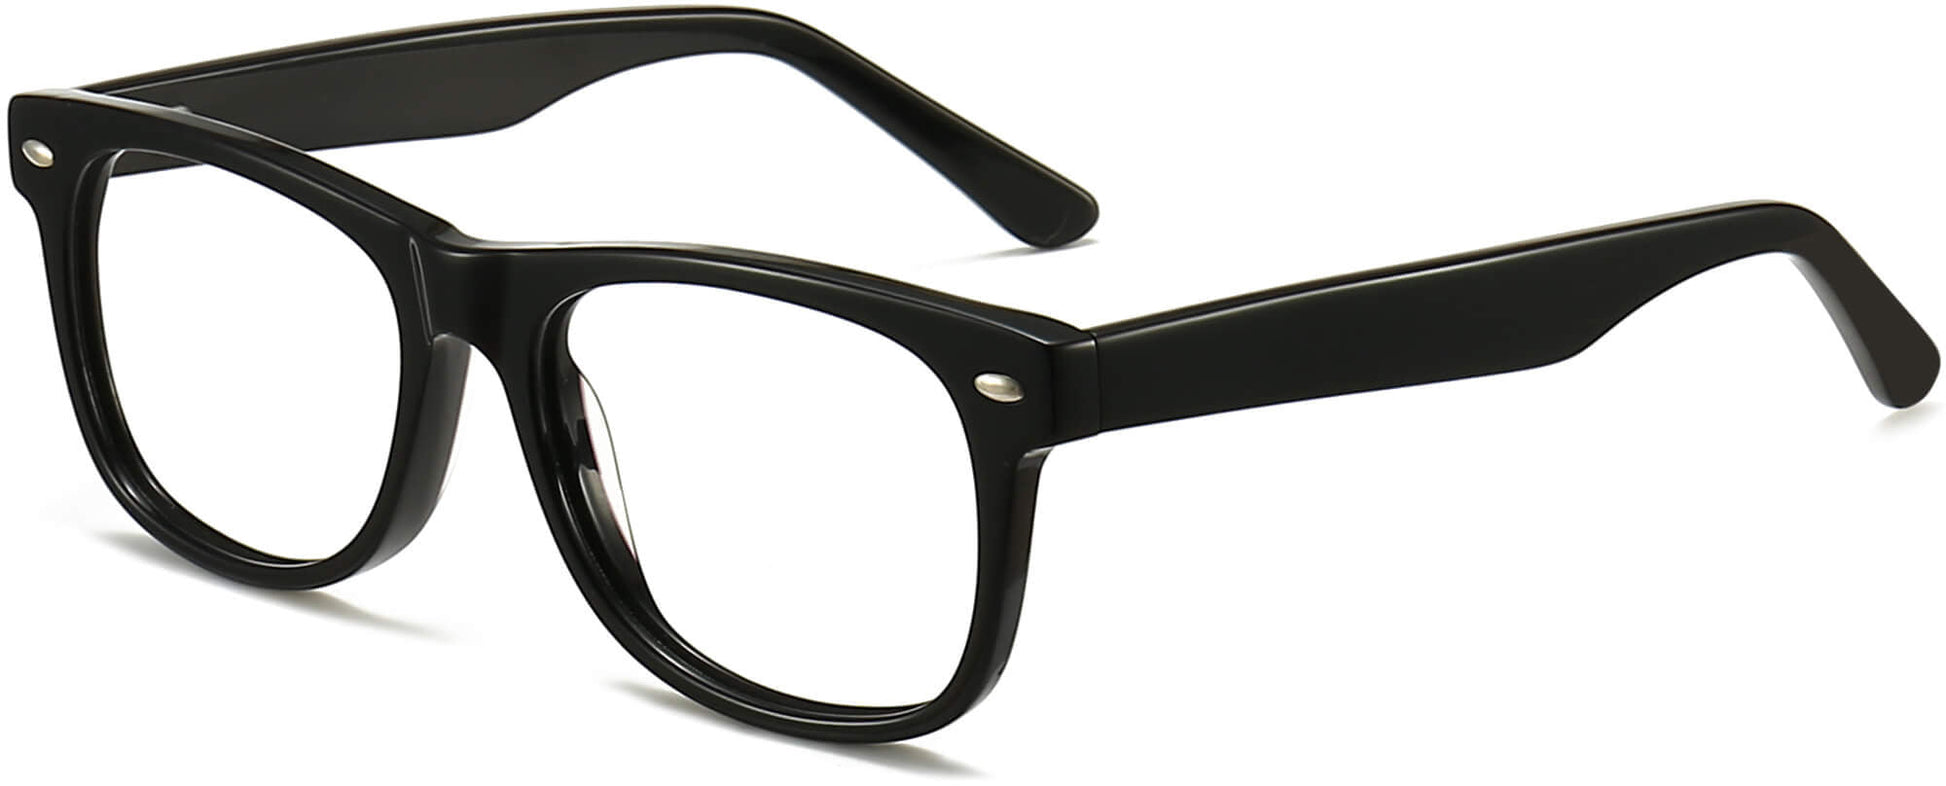 Valentino Round Black Eyeglasses from ANRRI, angle view